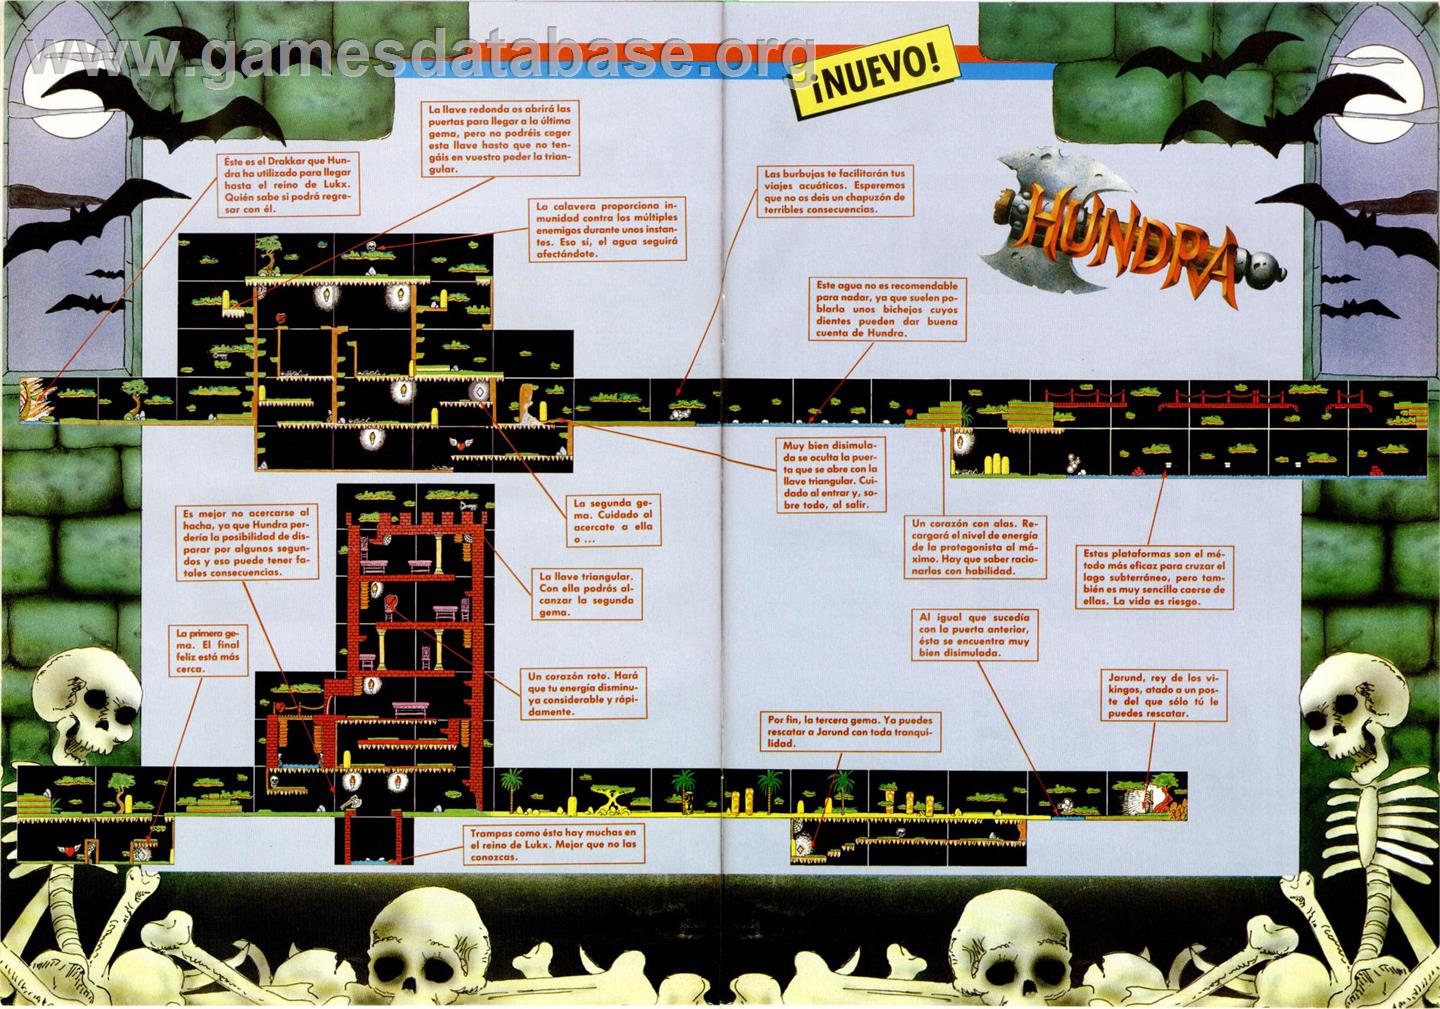 Hundra - Amstrad CPC - Artwork - Map